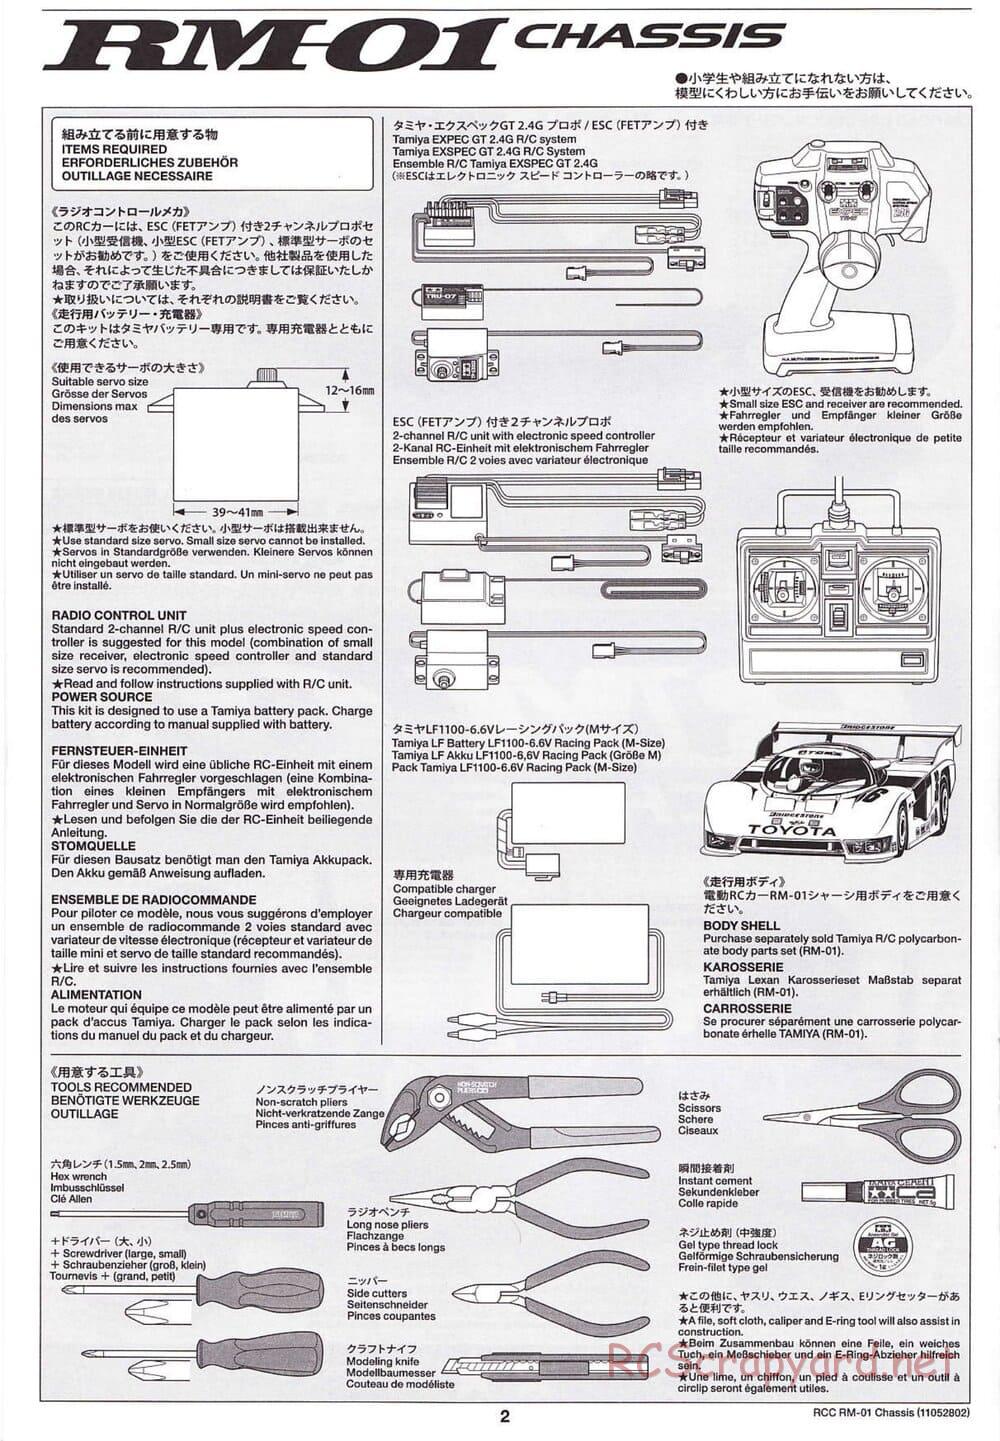 Tamiya - RM-01 Chassis - Manual - Page 2